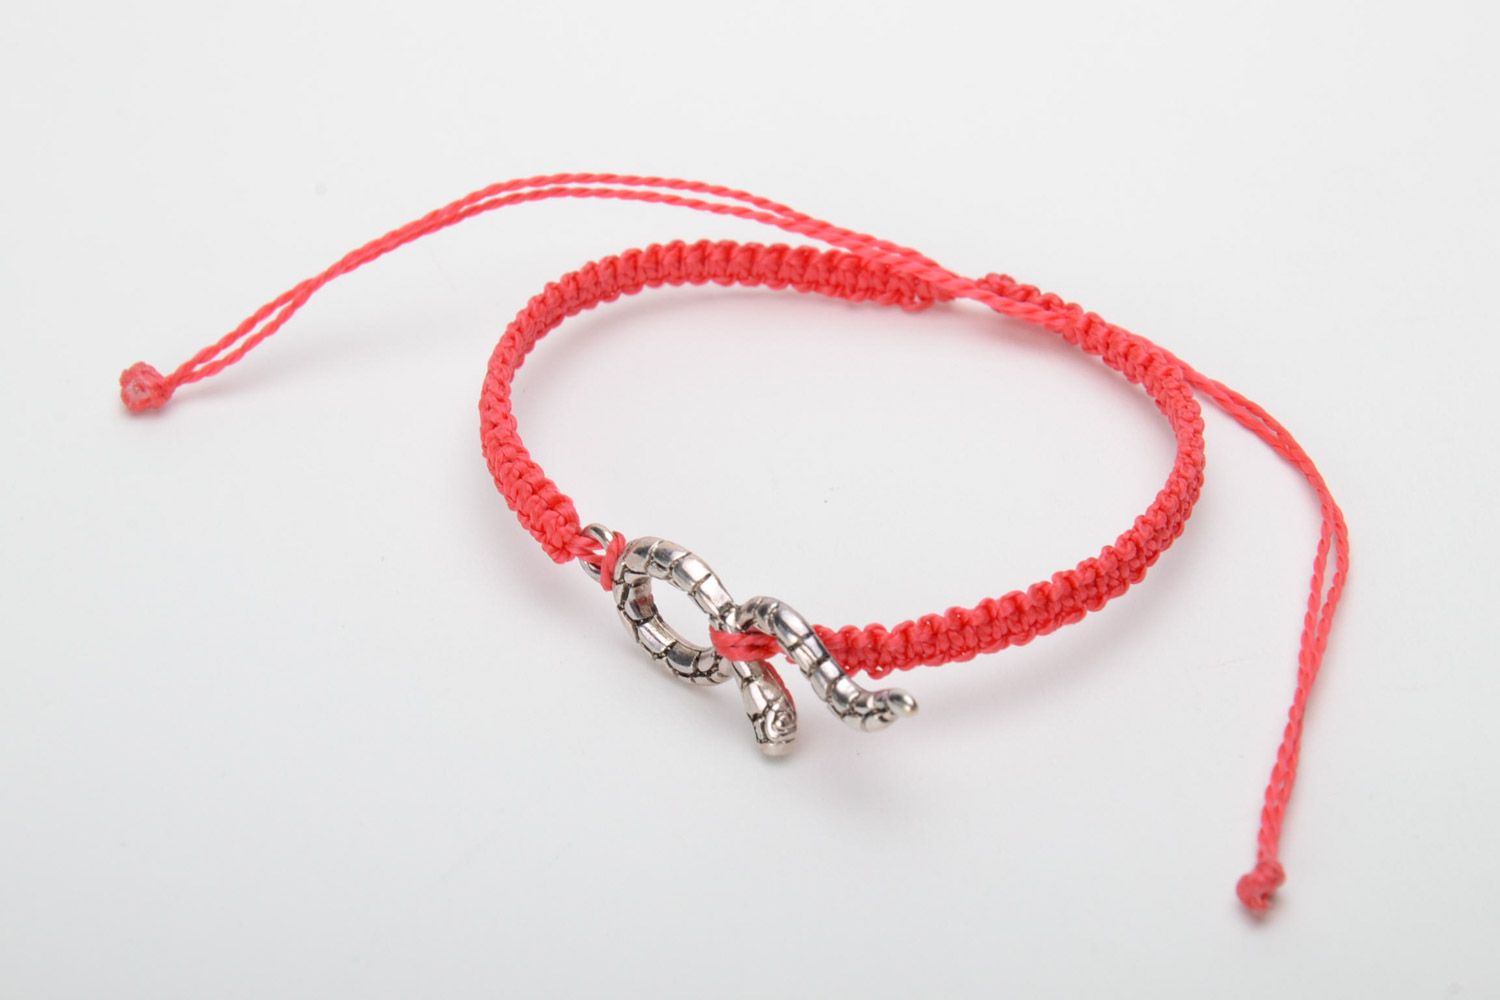 Handmade designer women's macrame bracelet of red color with metal snake charm photo 3